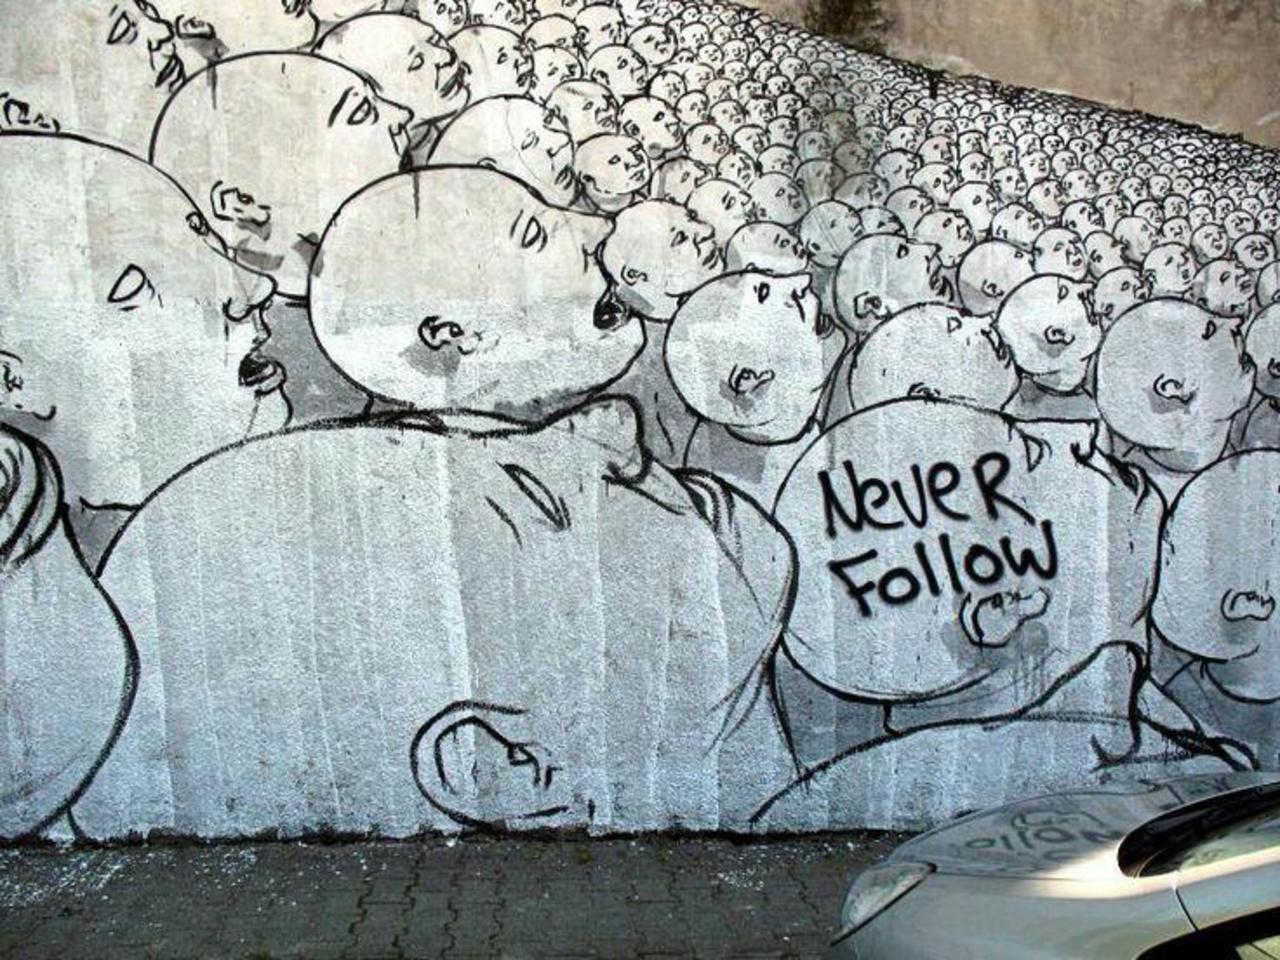 #art #streetart #graffiti http://t.co/lACiRotBCa